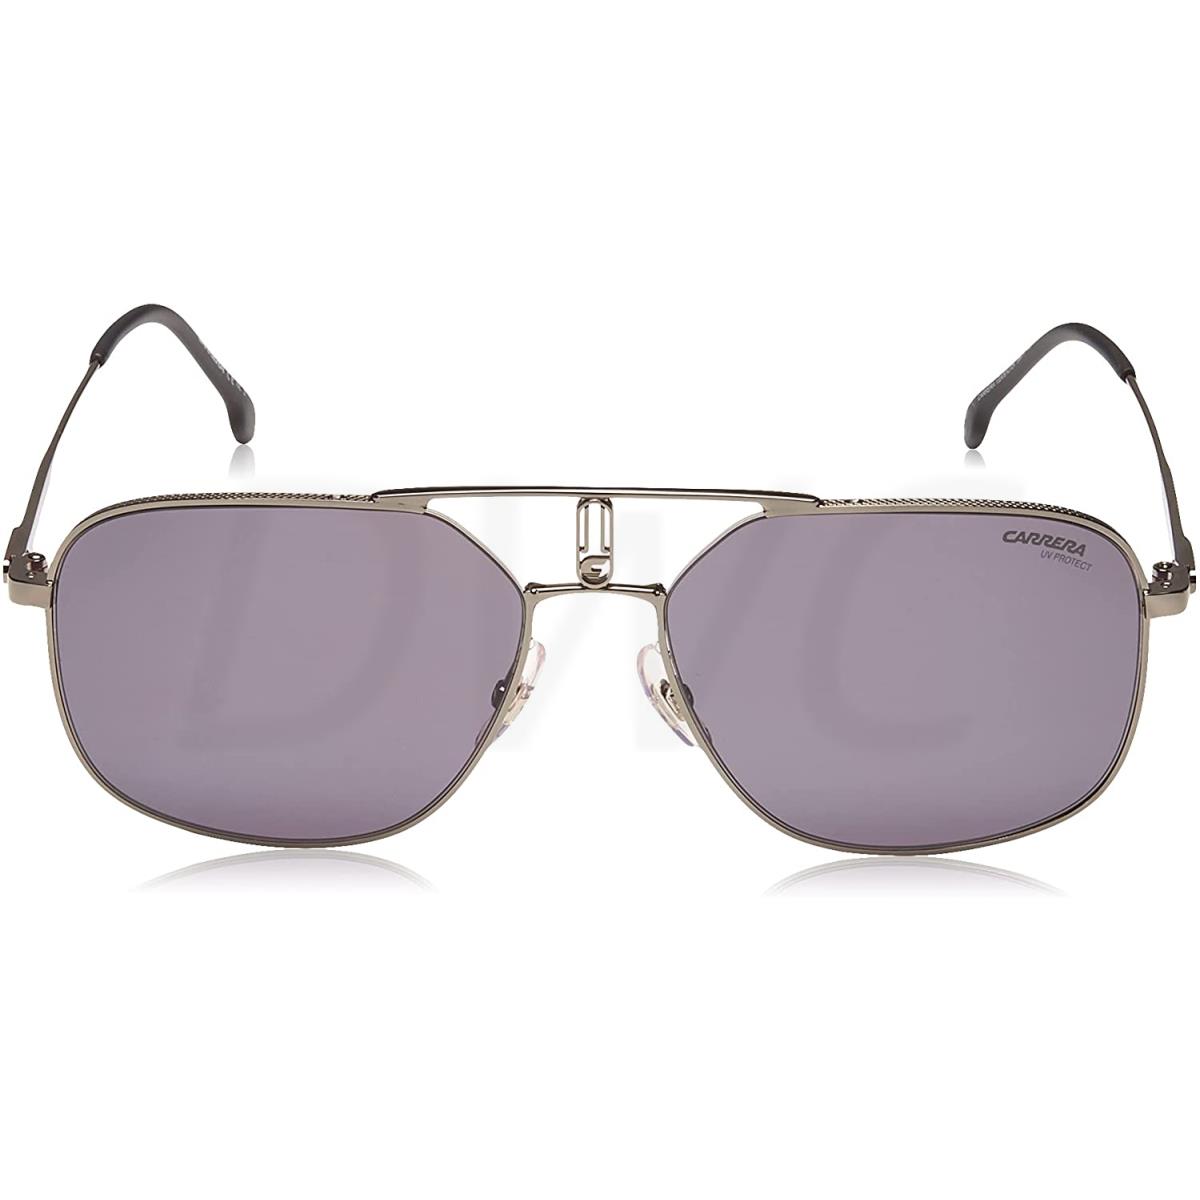 Carrera sunglasses  - Dark Ruthenium Frame, Gray Ar Lens